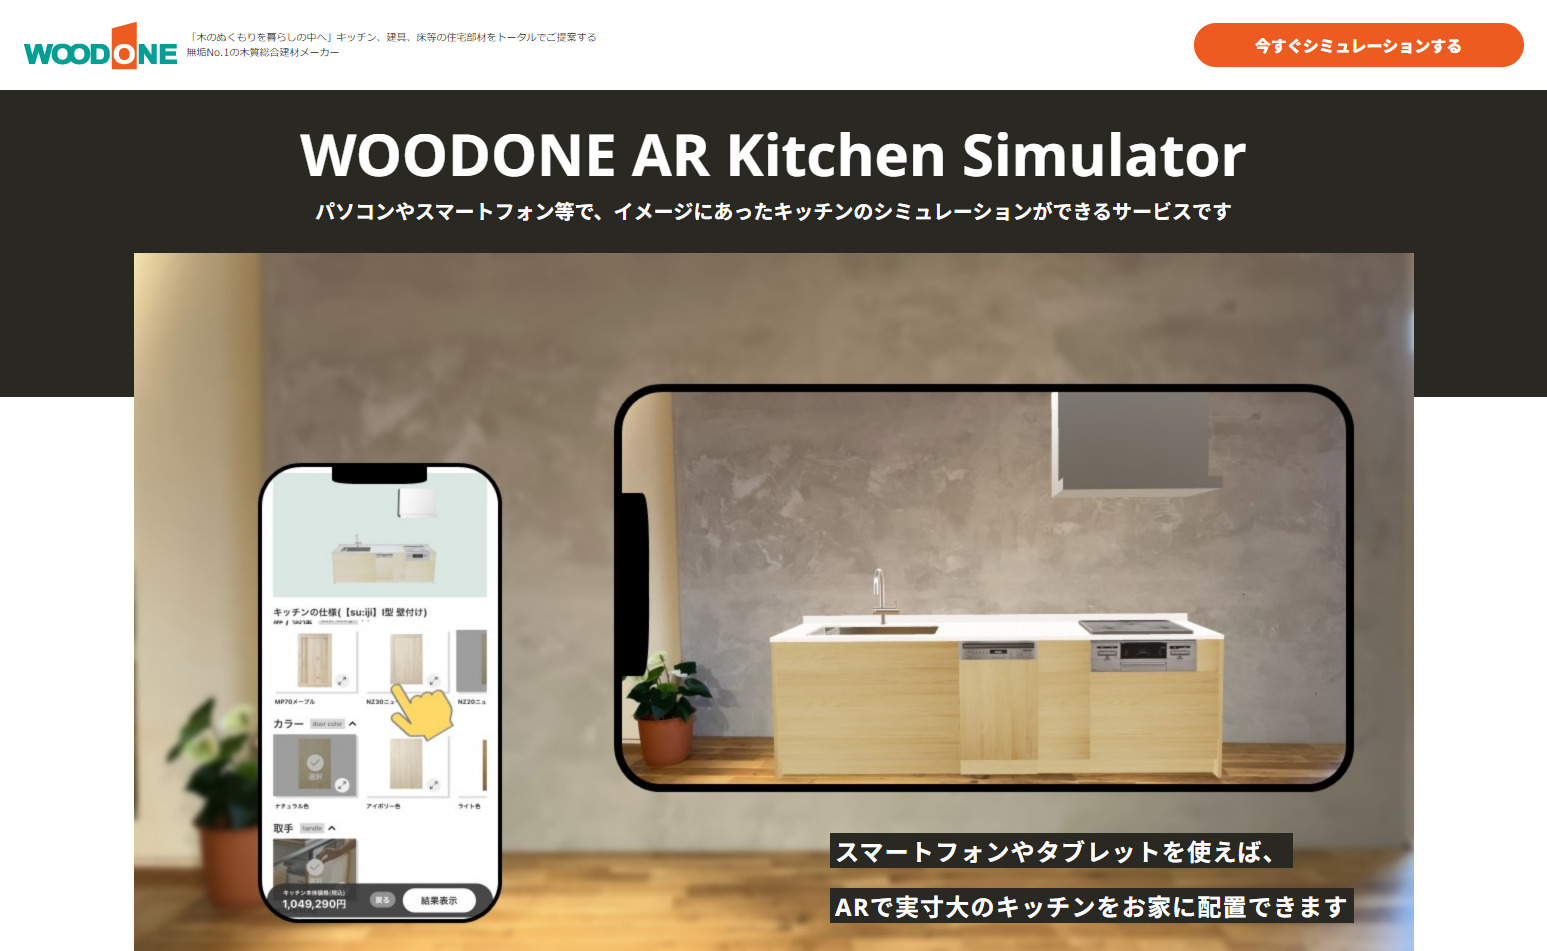 WOODONE AR Kitchen Simulator